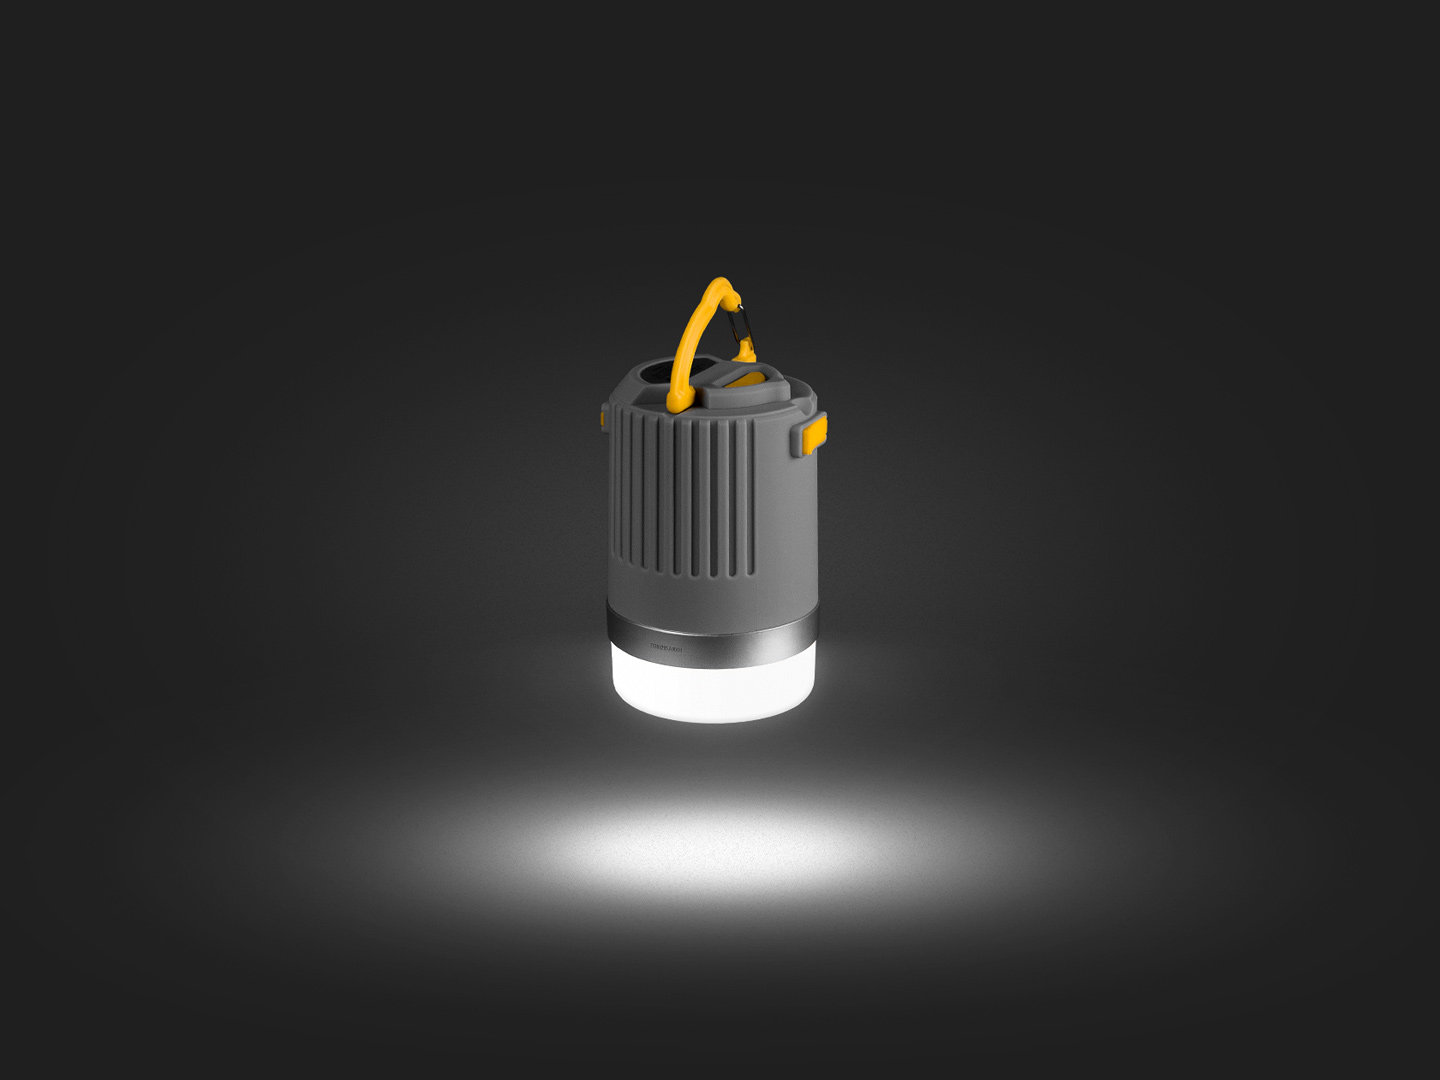 NEO TR88 Портативный аккумулятор
8 800 мАч • LED фонарь